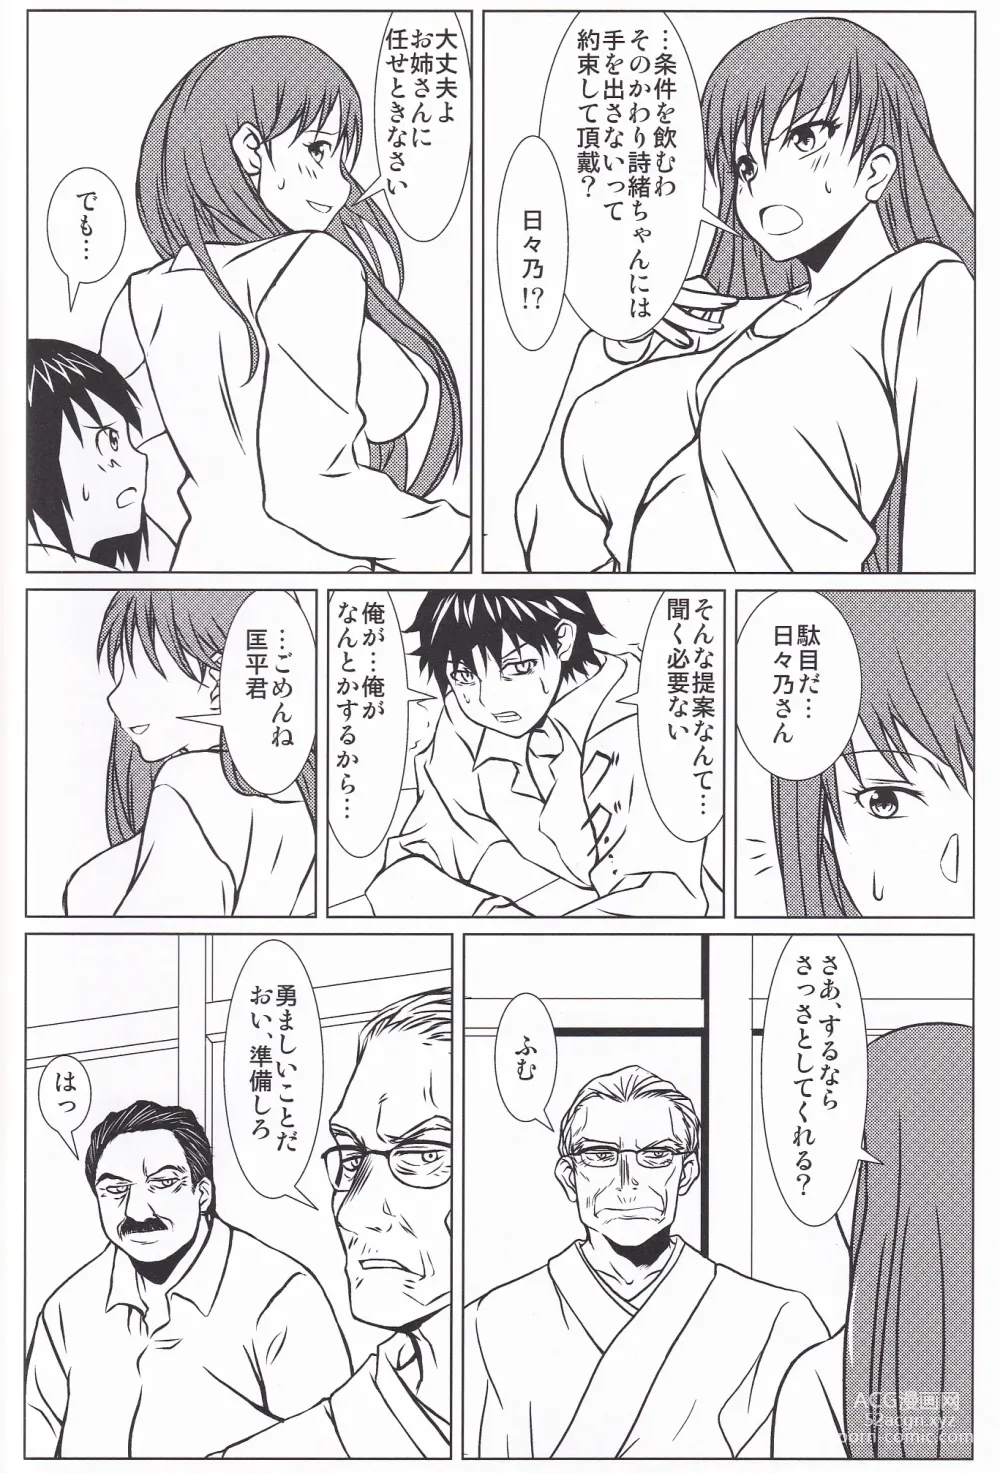 Page 7 of doujinshi Hibi no Uta